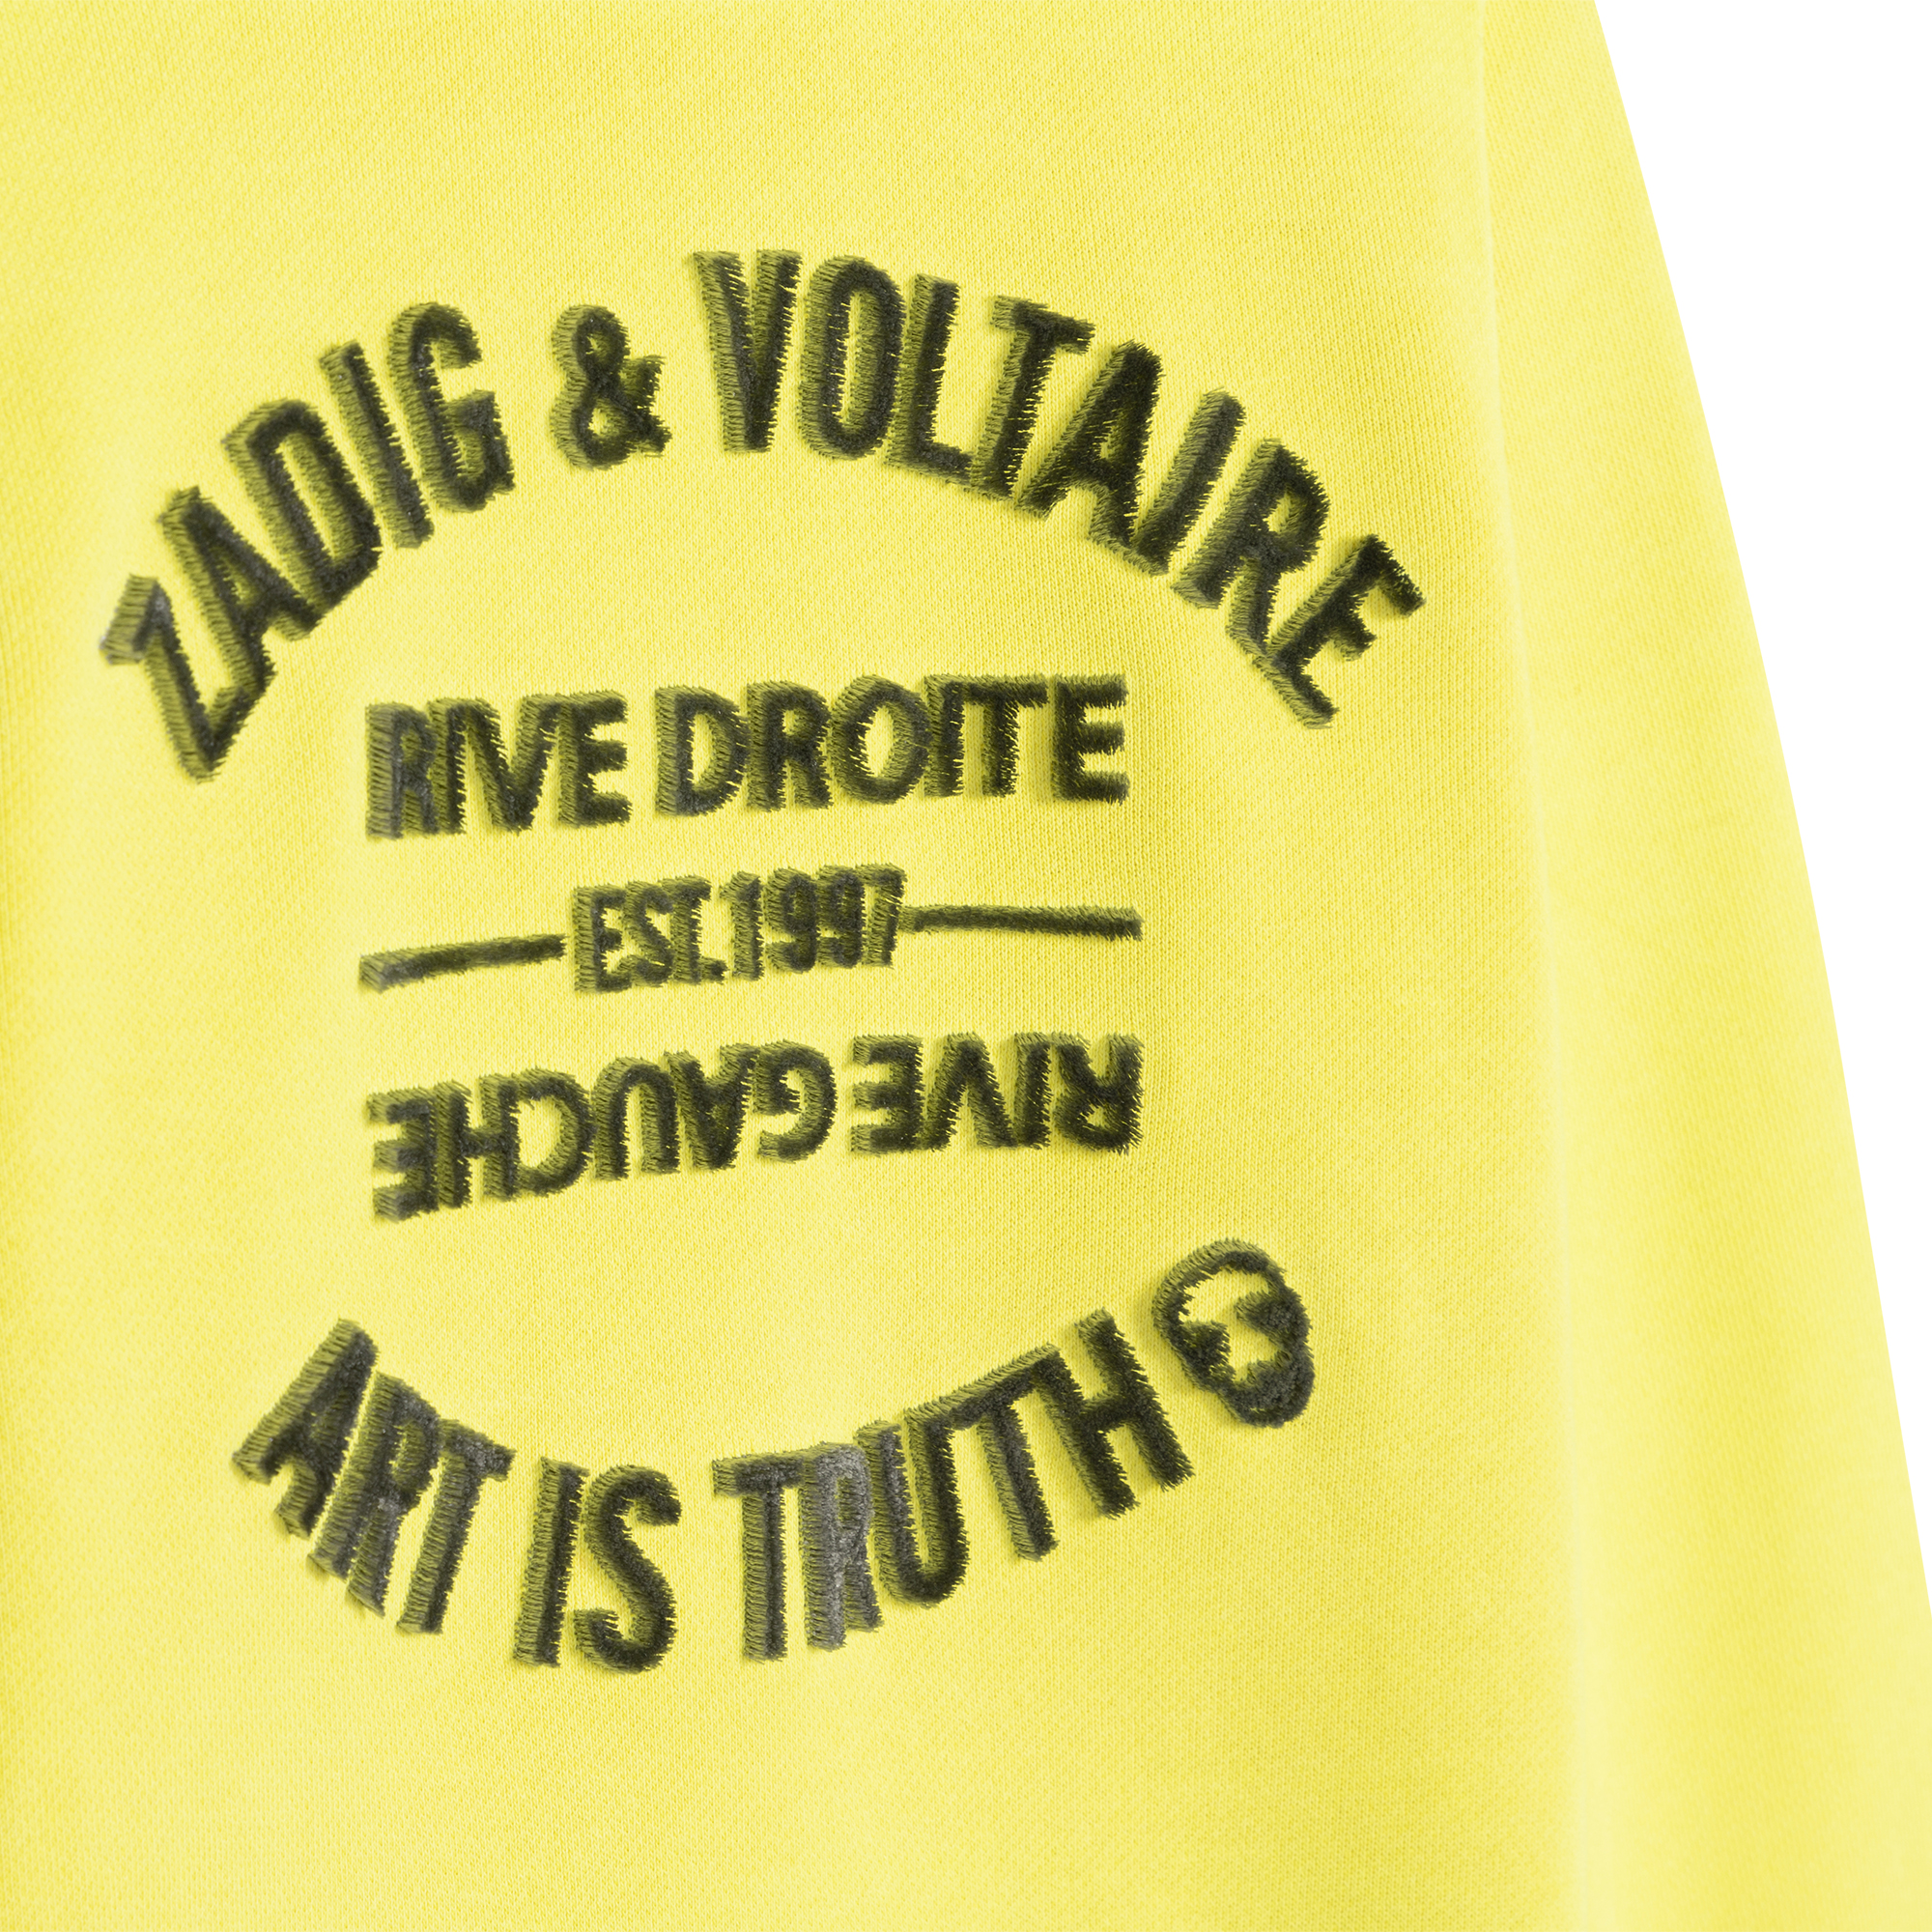 Cotton jersey sweatshirt ZADIG & VOLTAIRE for BOY